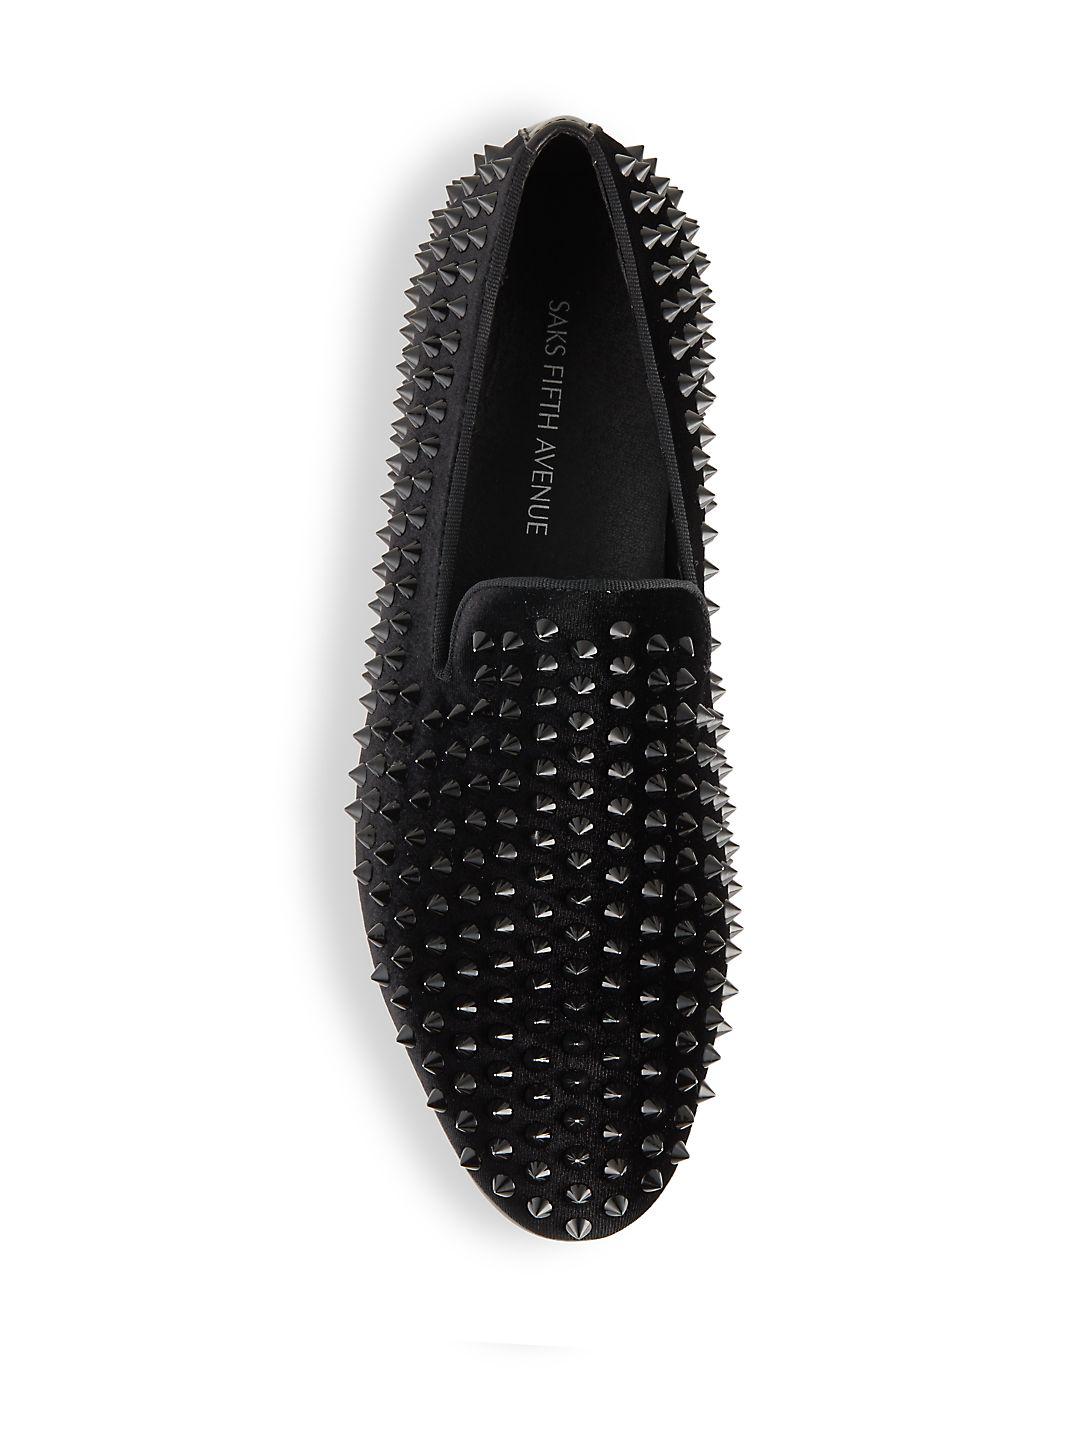 Saks Fifth Avenue Synthetic Studded Tonal Slipper in Black for Men - Lyst